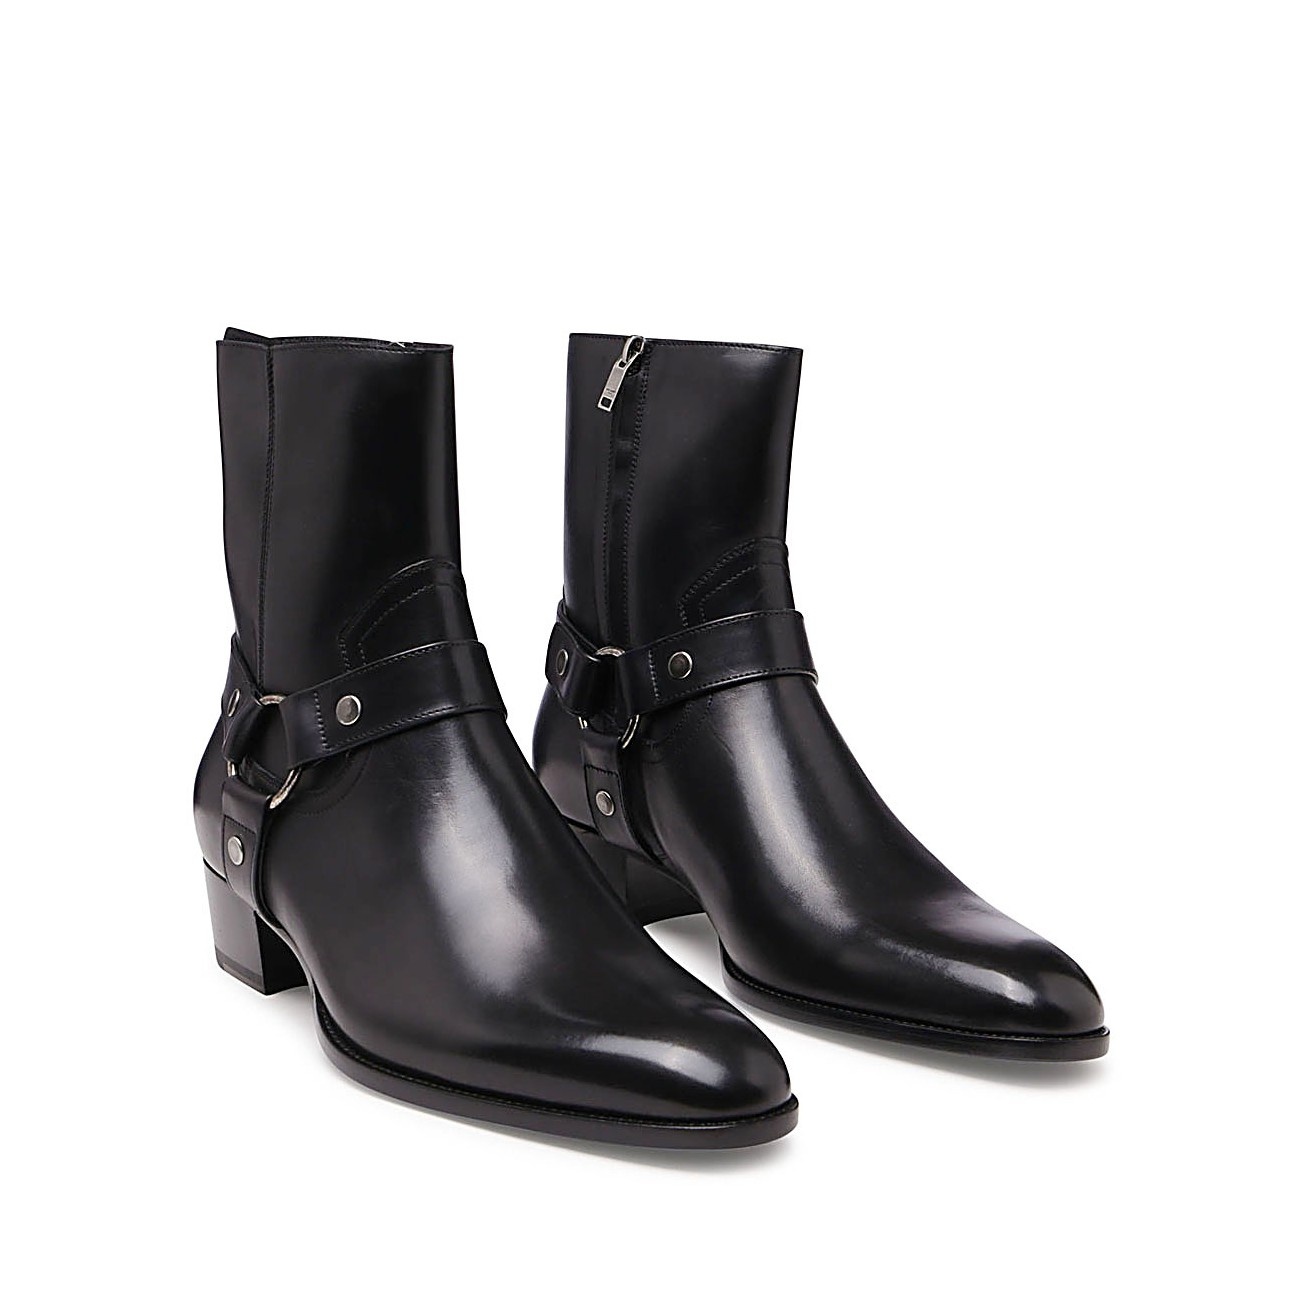 black leather wyatt harness boots - 3